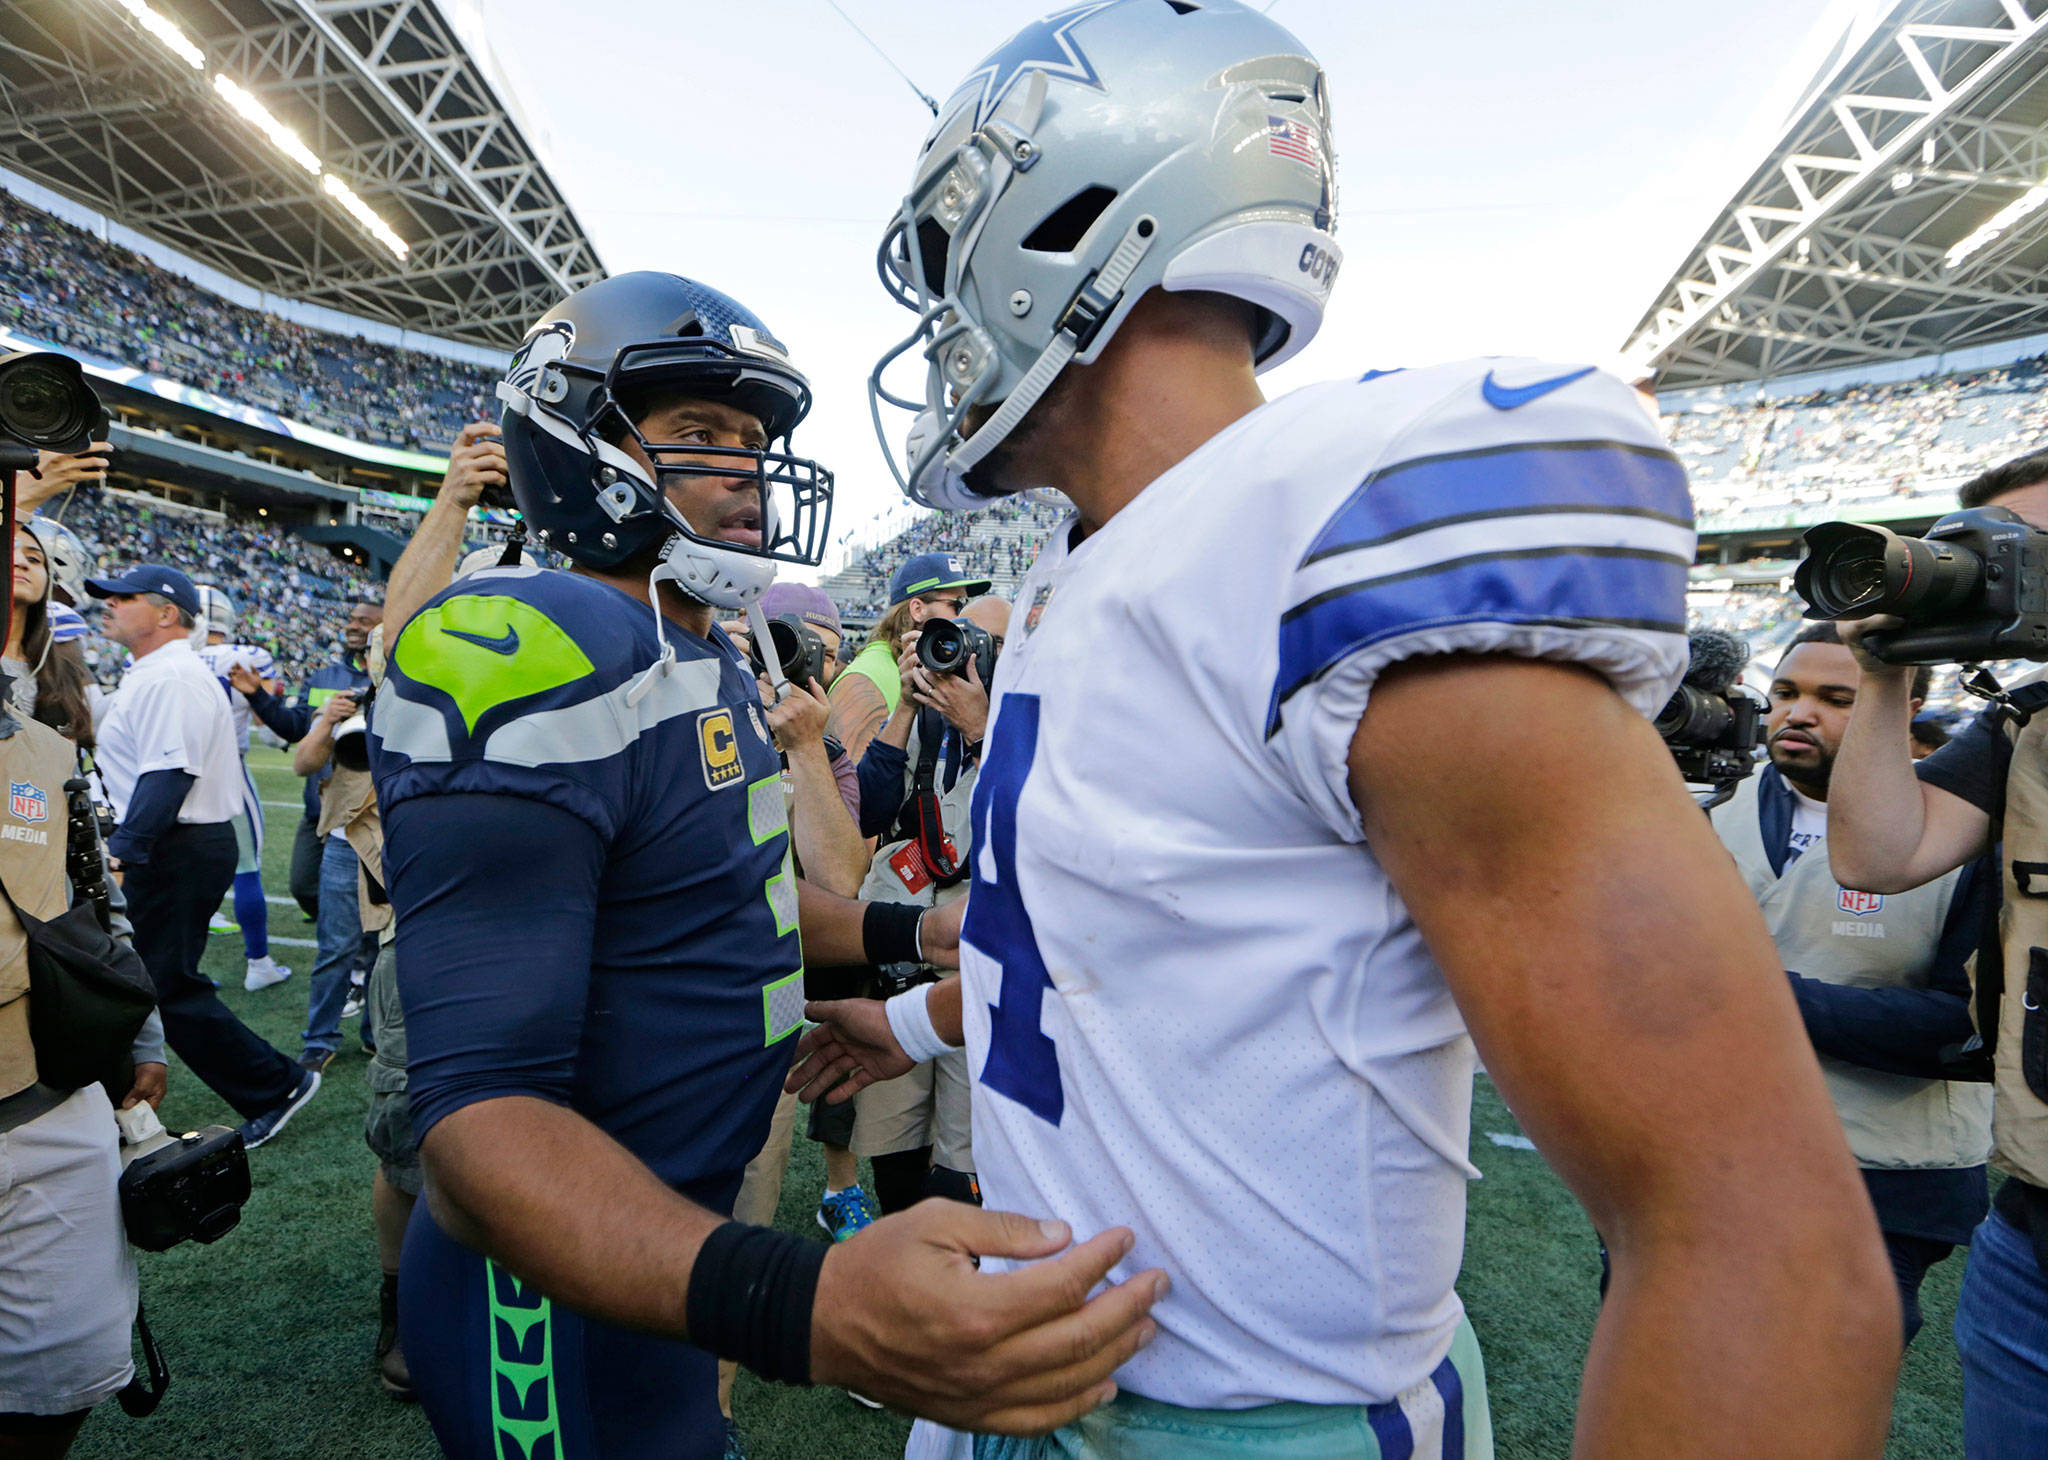 Seahawks quarterback Russell Wilson (left) greets Cowboys quarterback Dak Prescott (right) following a game on Sept. 23, 2018, in Seattle. (AP Photo/John Froschauer)